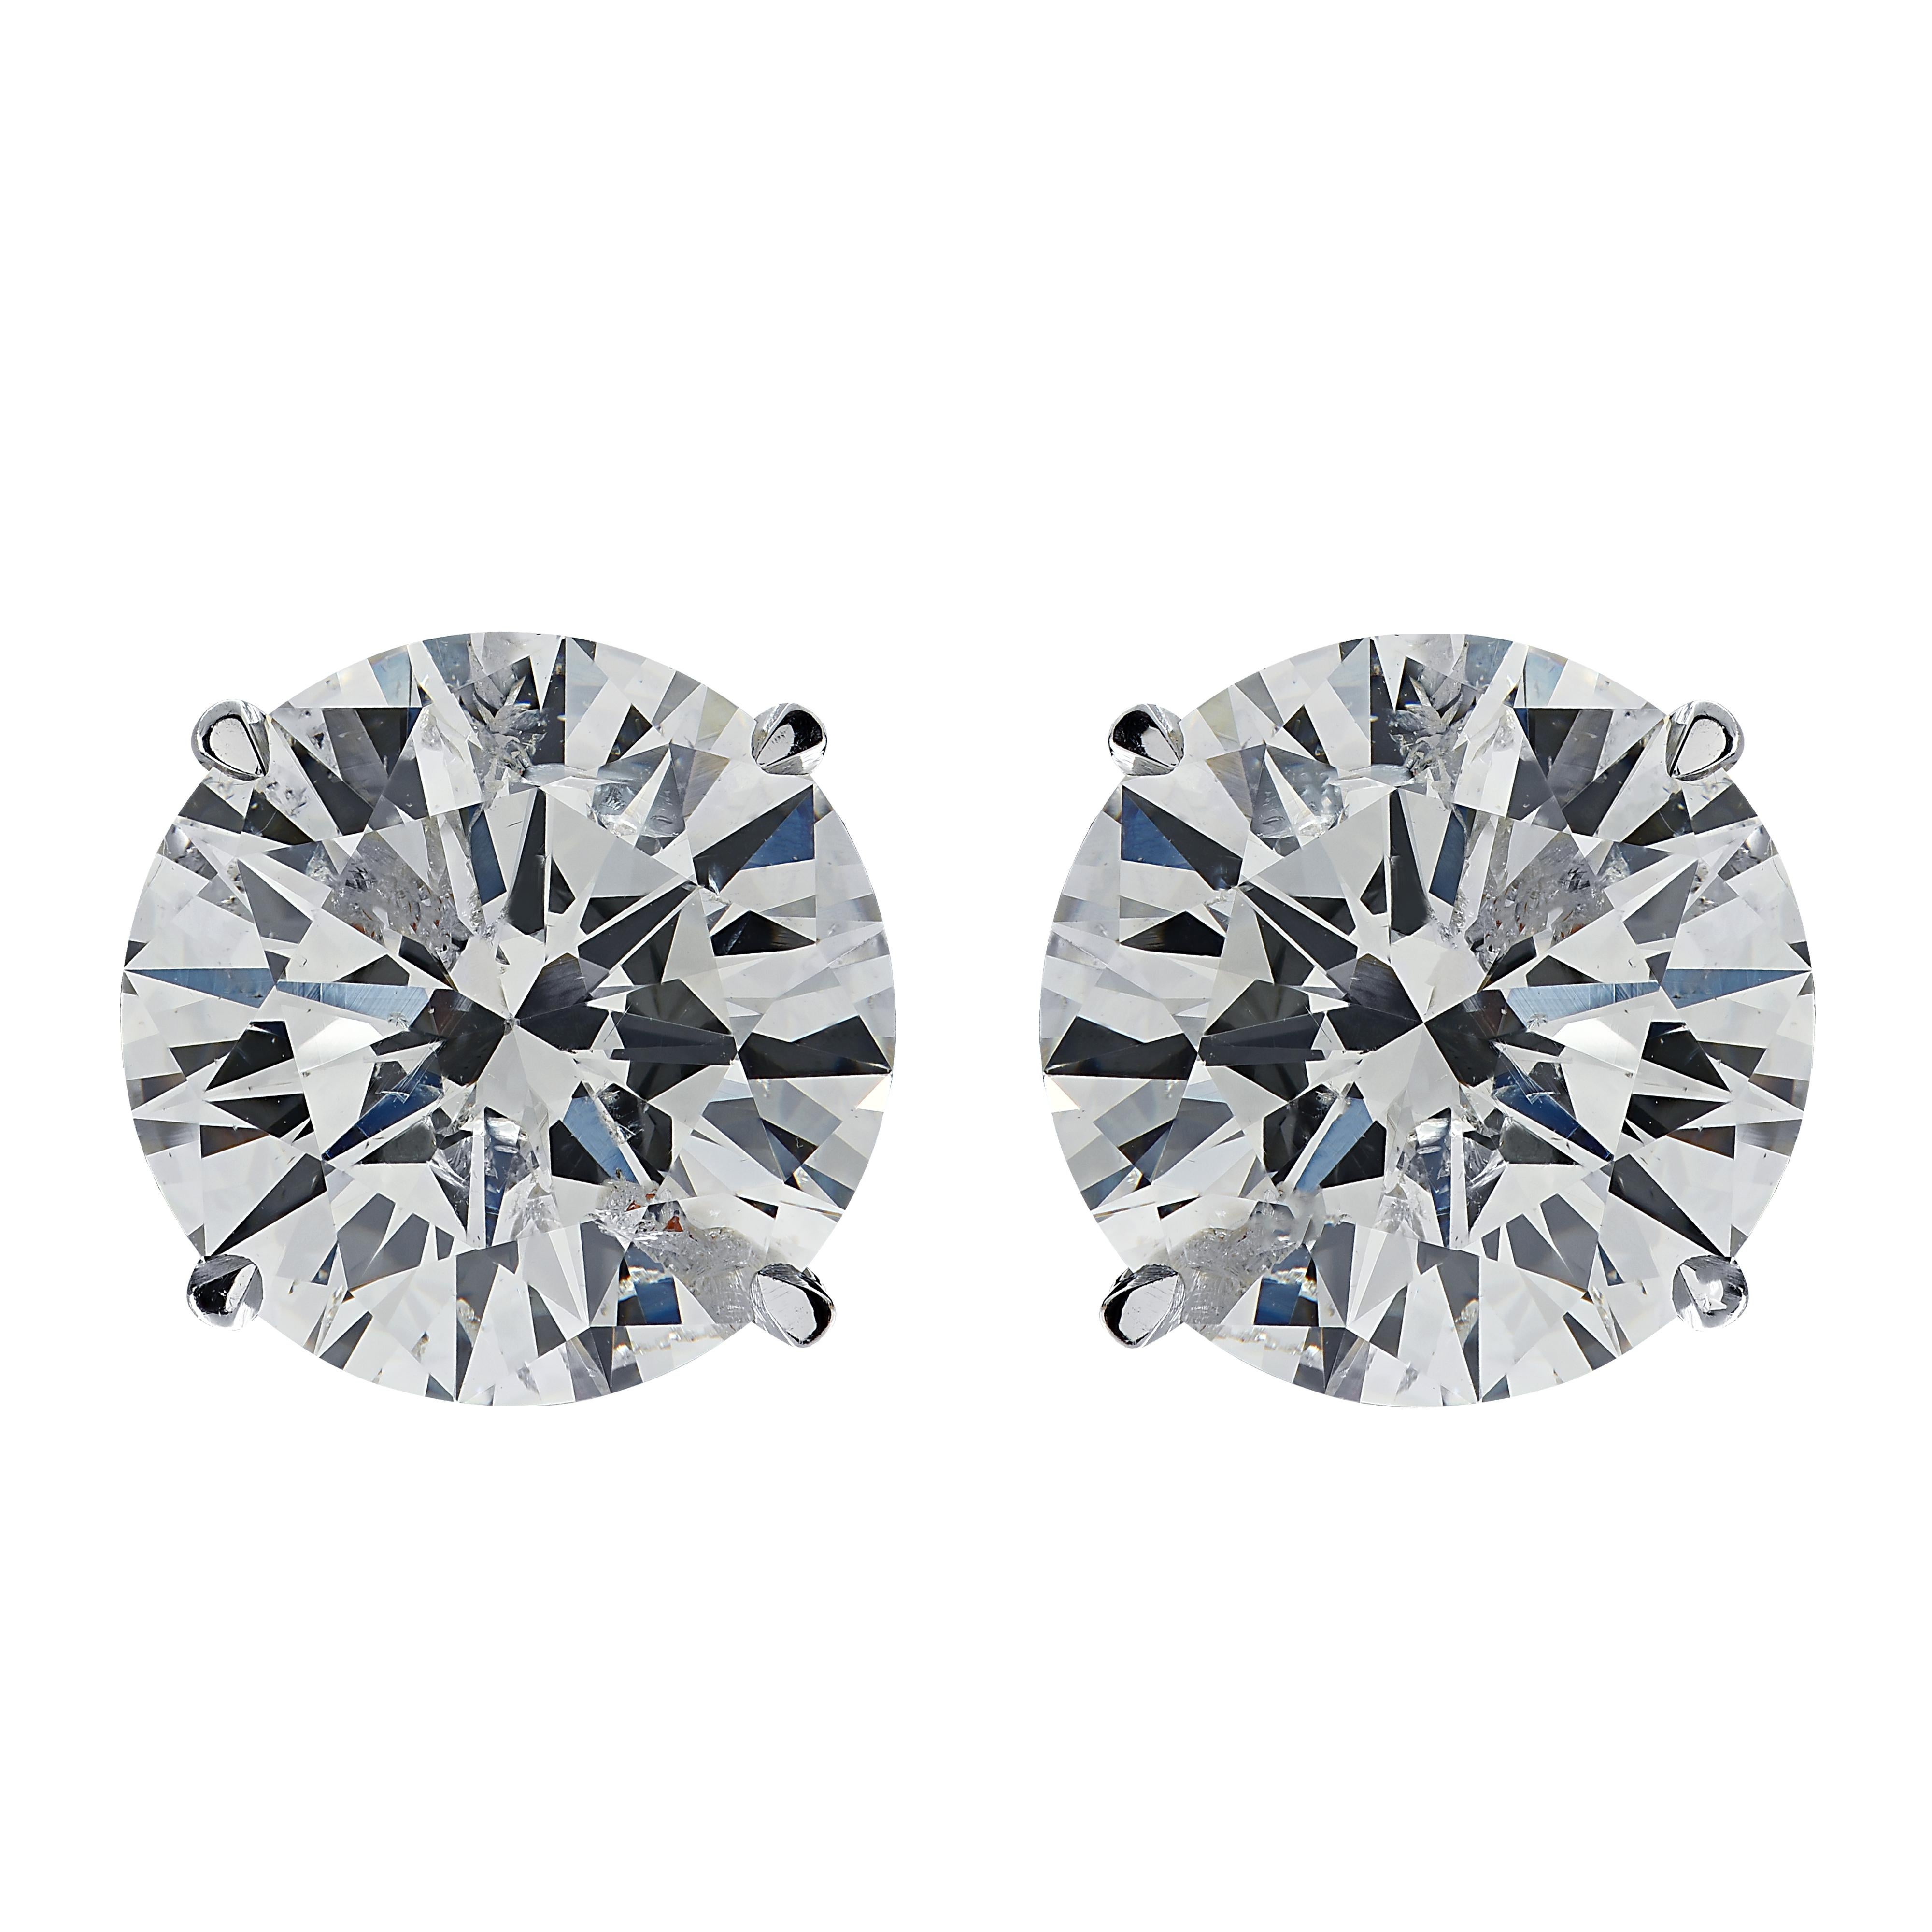 Modern Vivid Diamonds 2.56 Carat Diamond Solitaire Stud Earrings